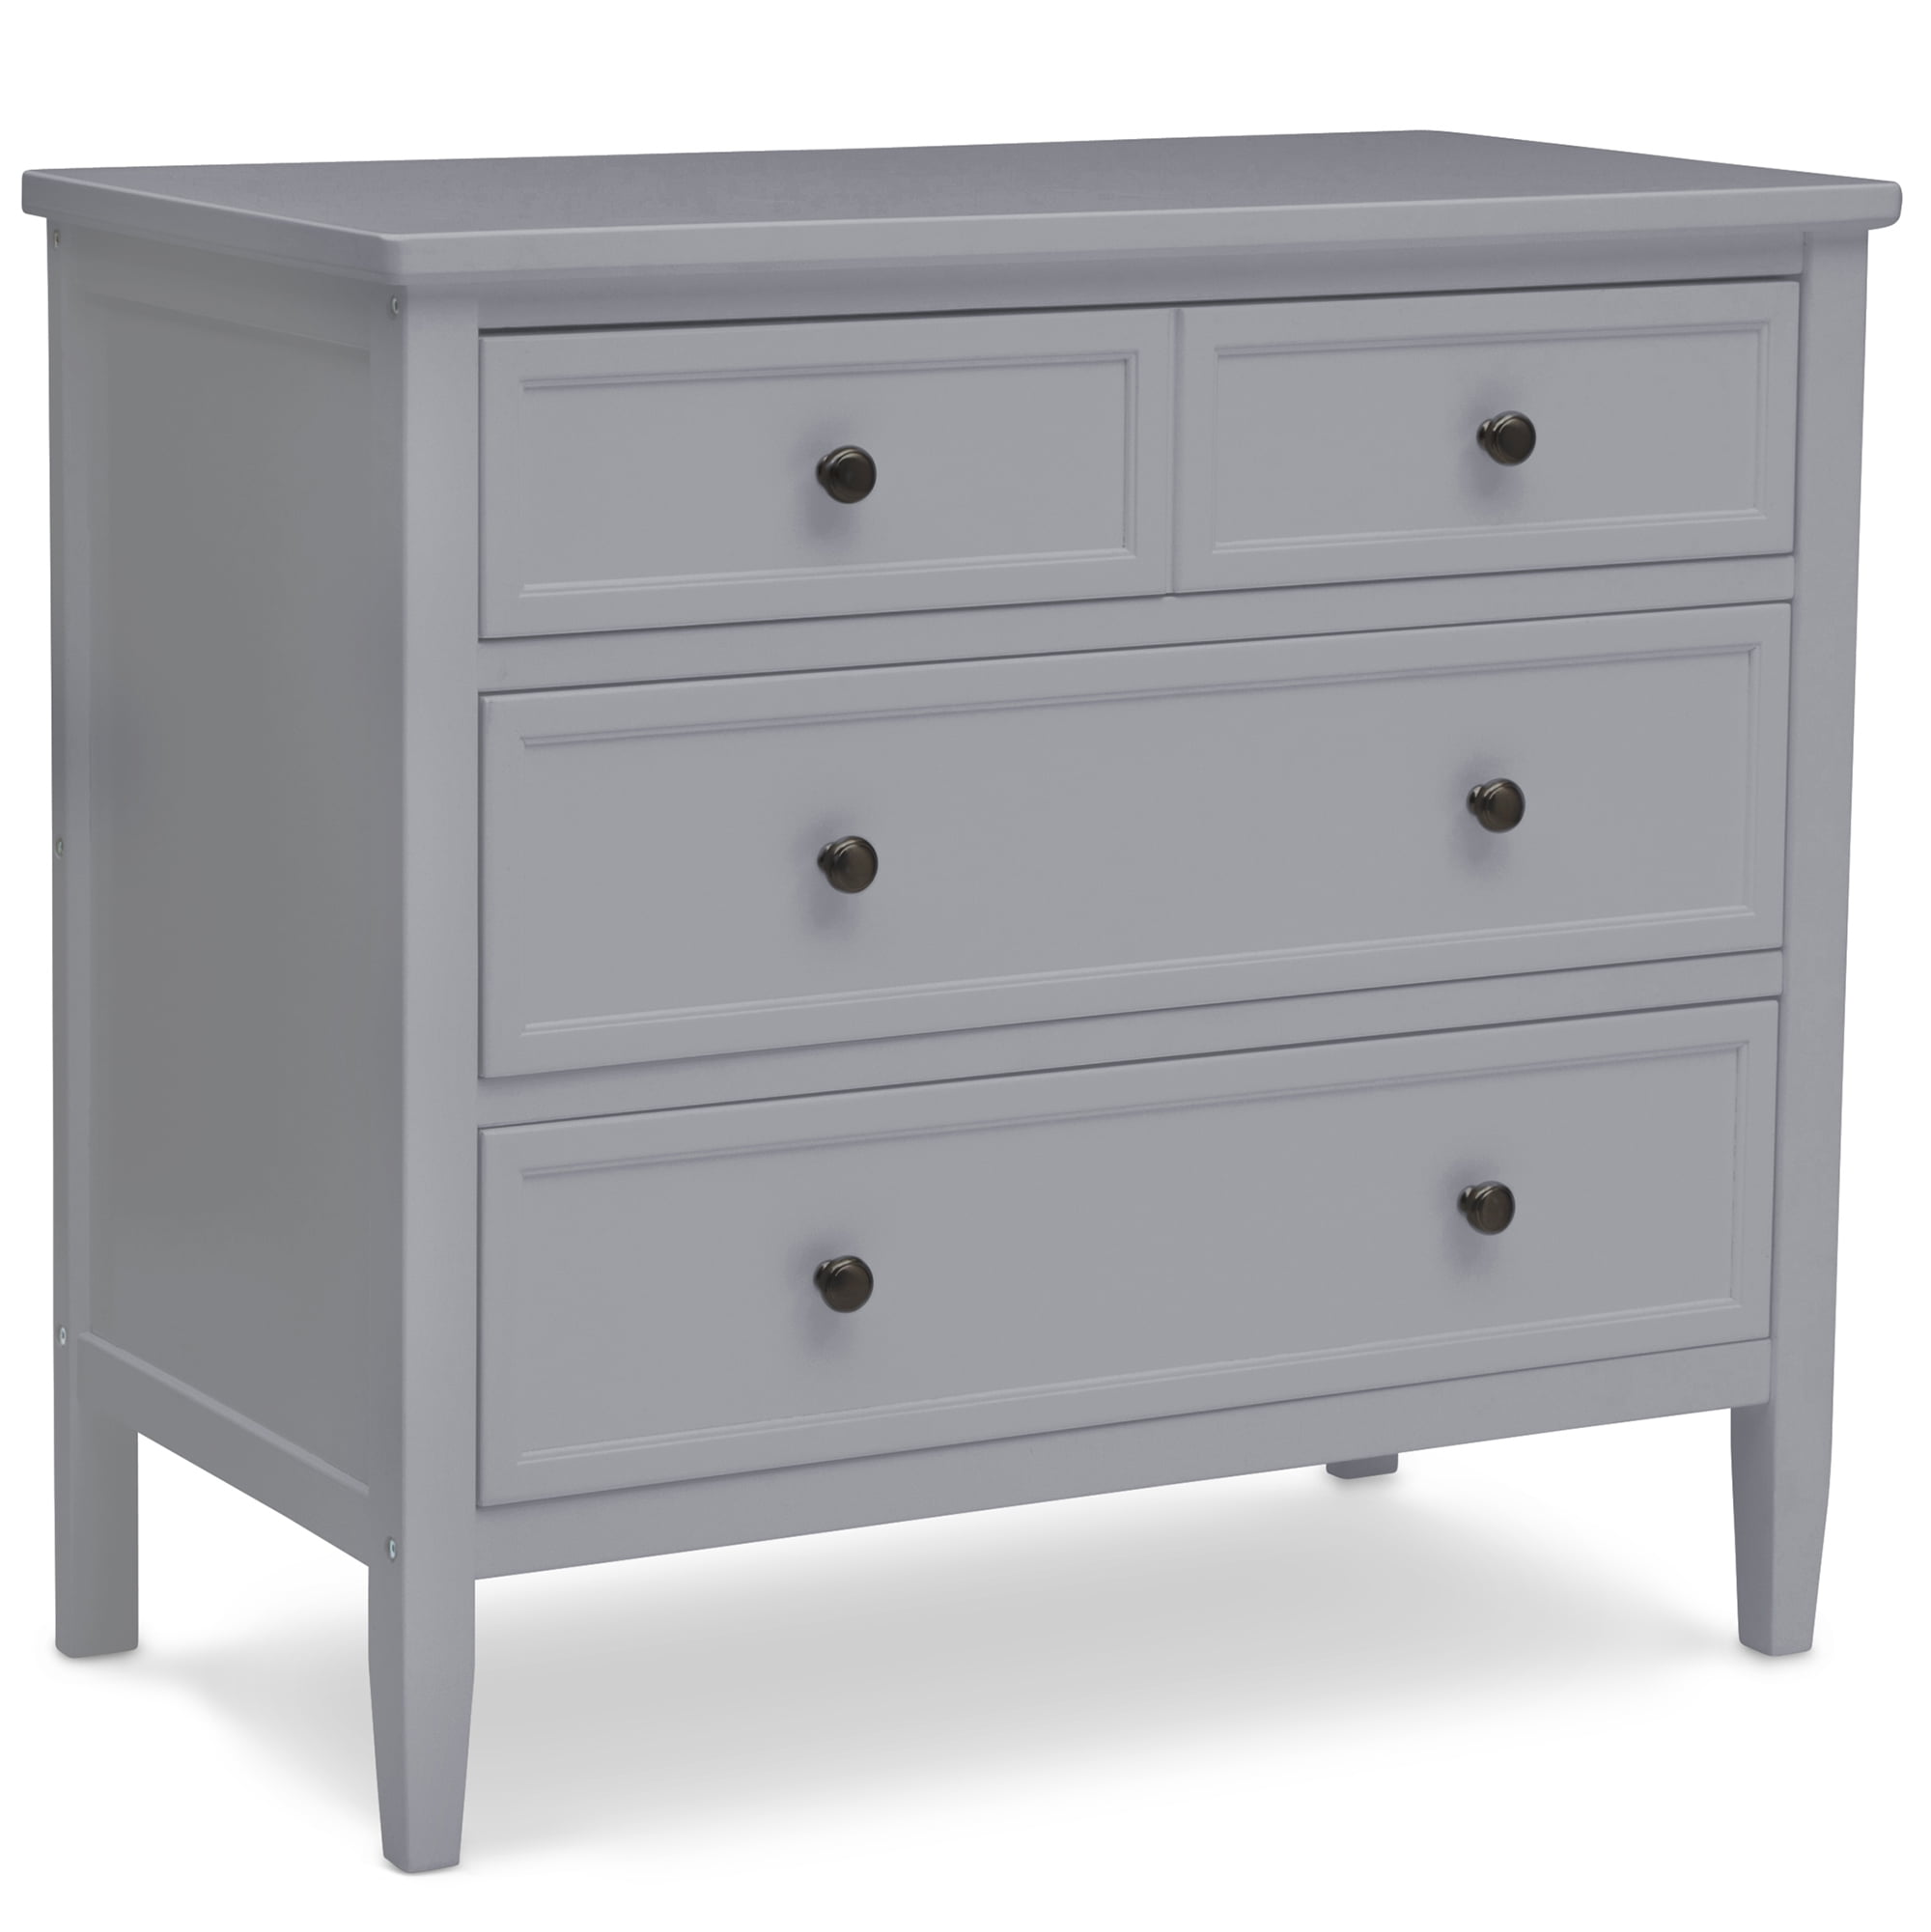 Dressers For Kids Child Bedroom Furniture 3 Drawer Clothes Storage Organizer New 